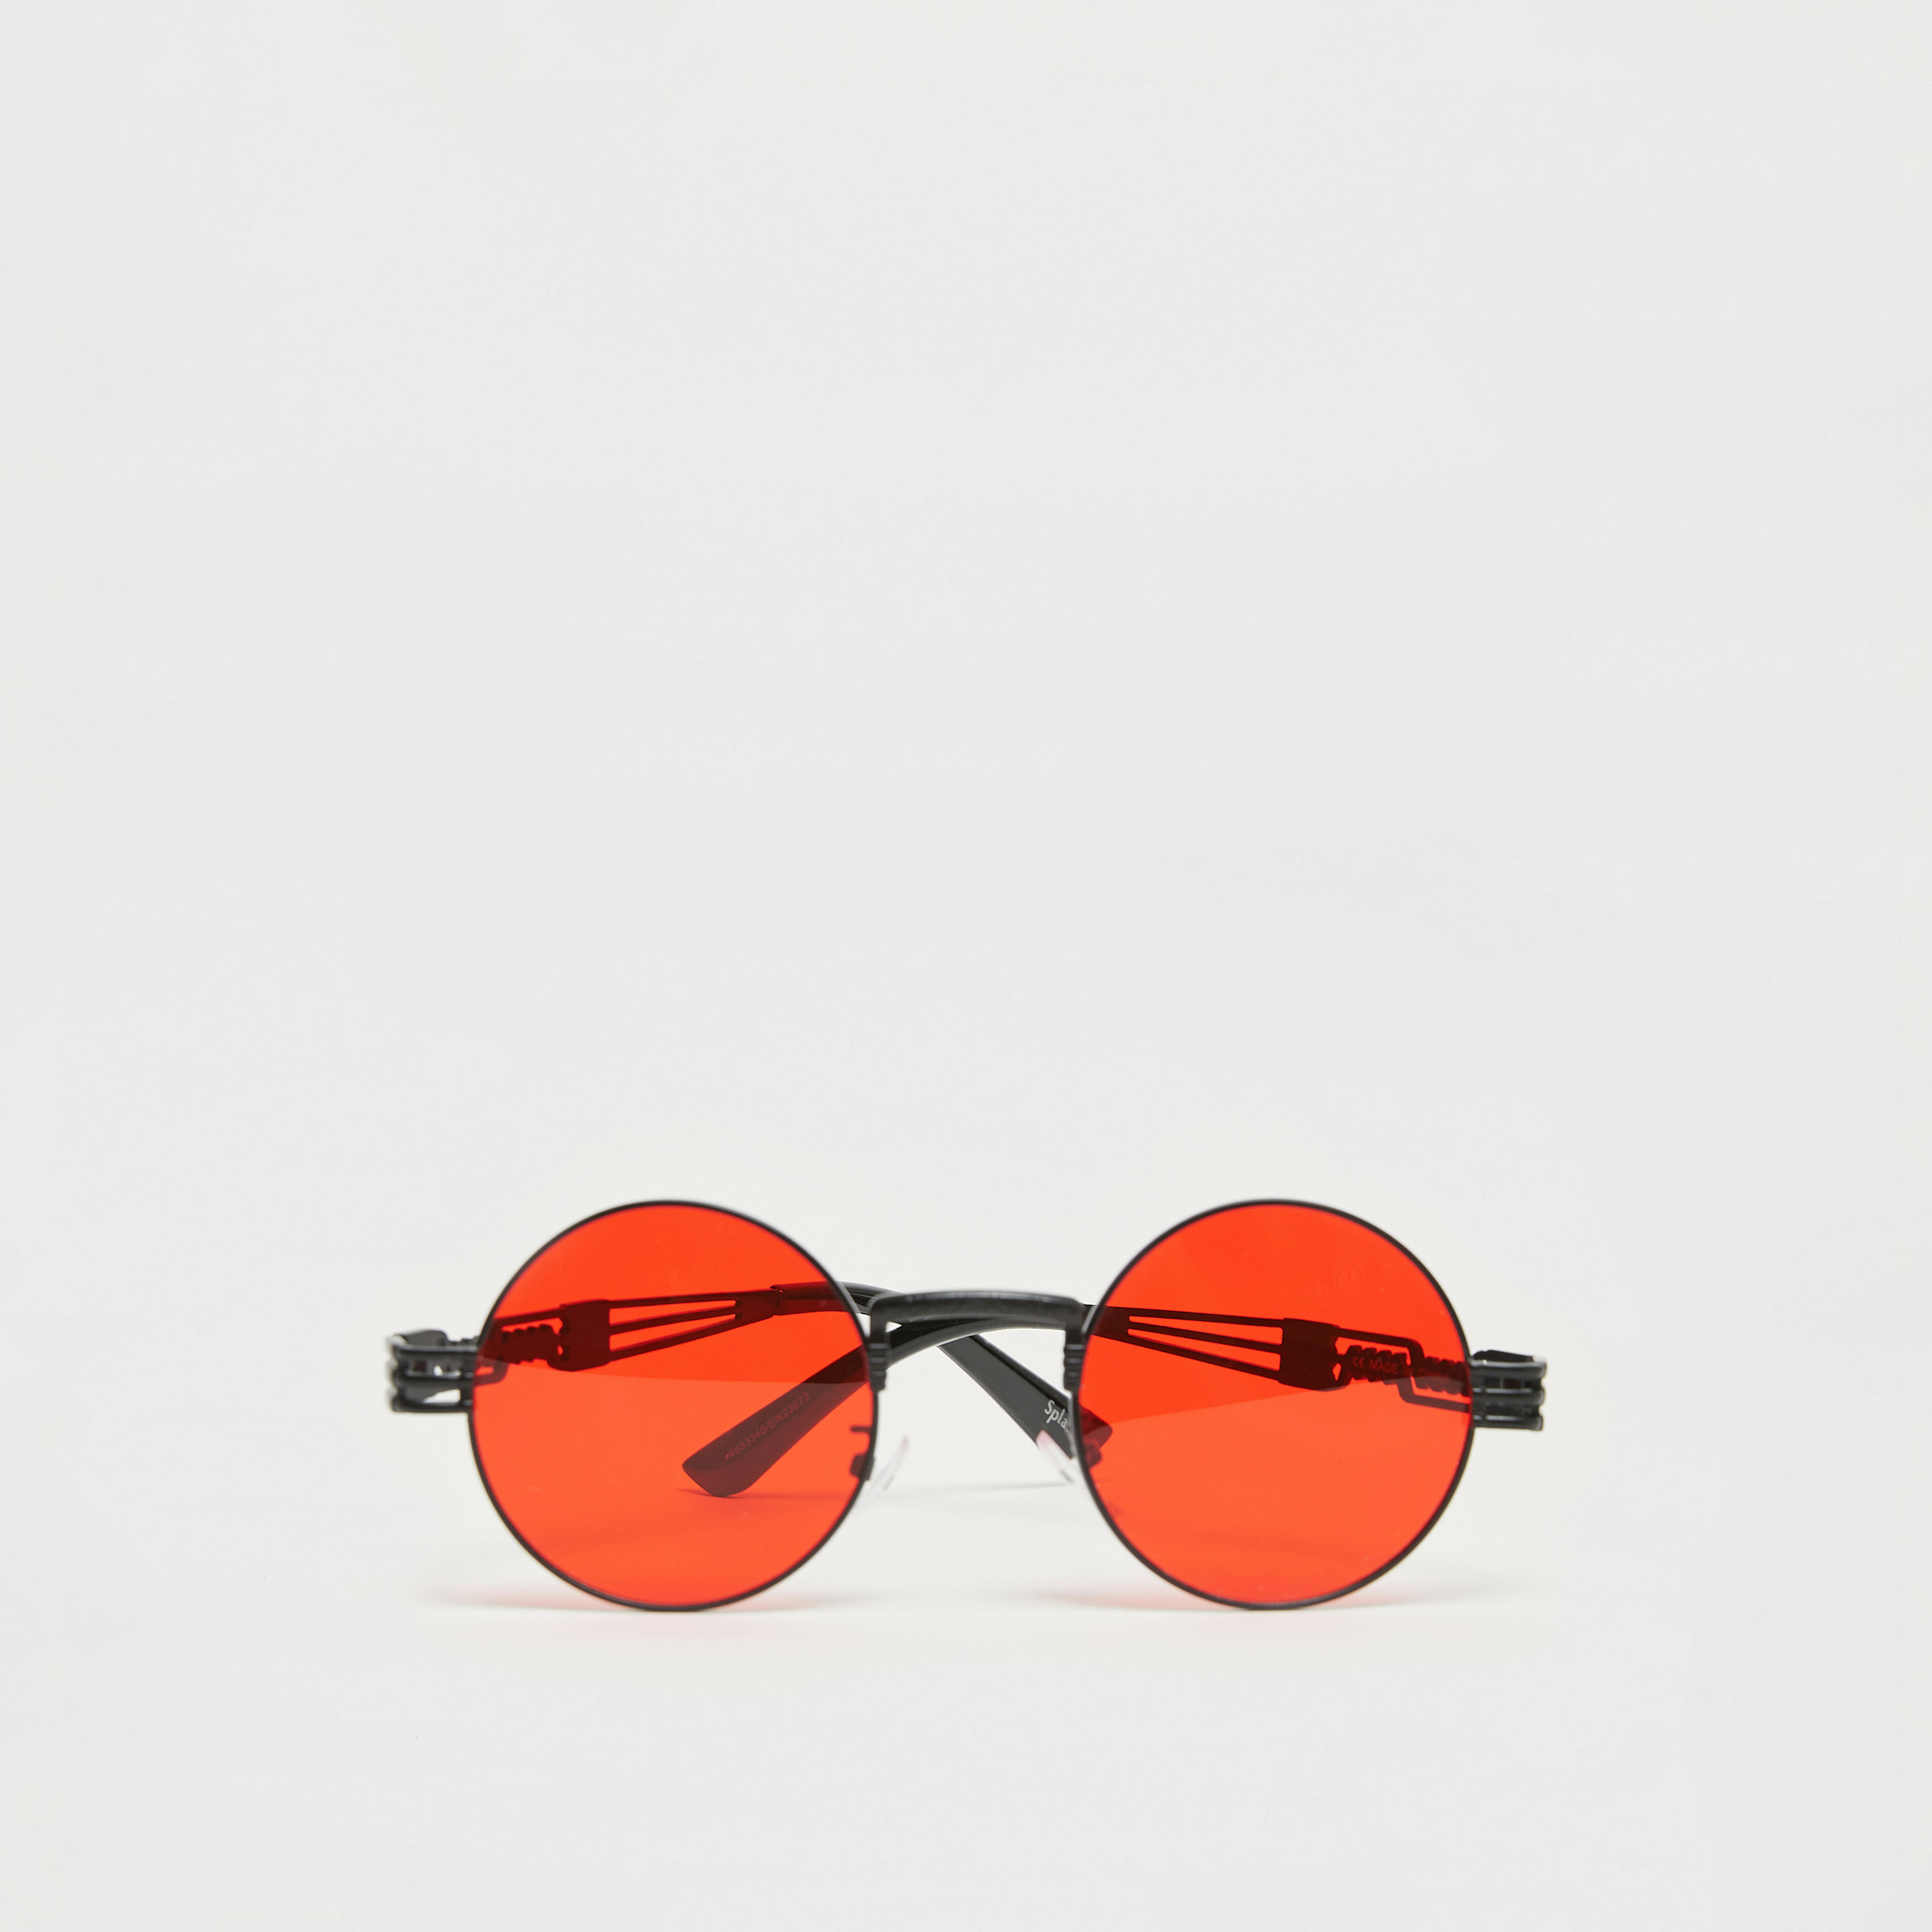 Silver Silicone Nose Pad Screw-in One Piece Bridge for Sunglasses Eyeglasses  | eBay